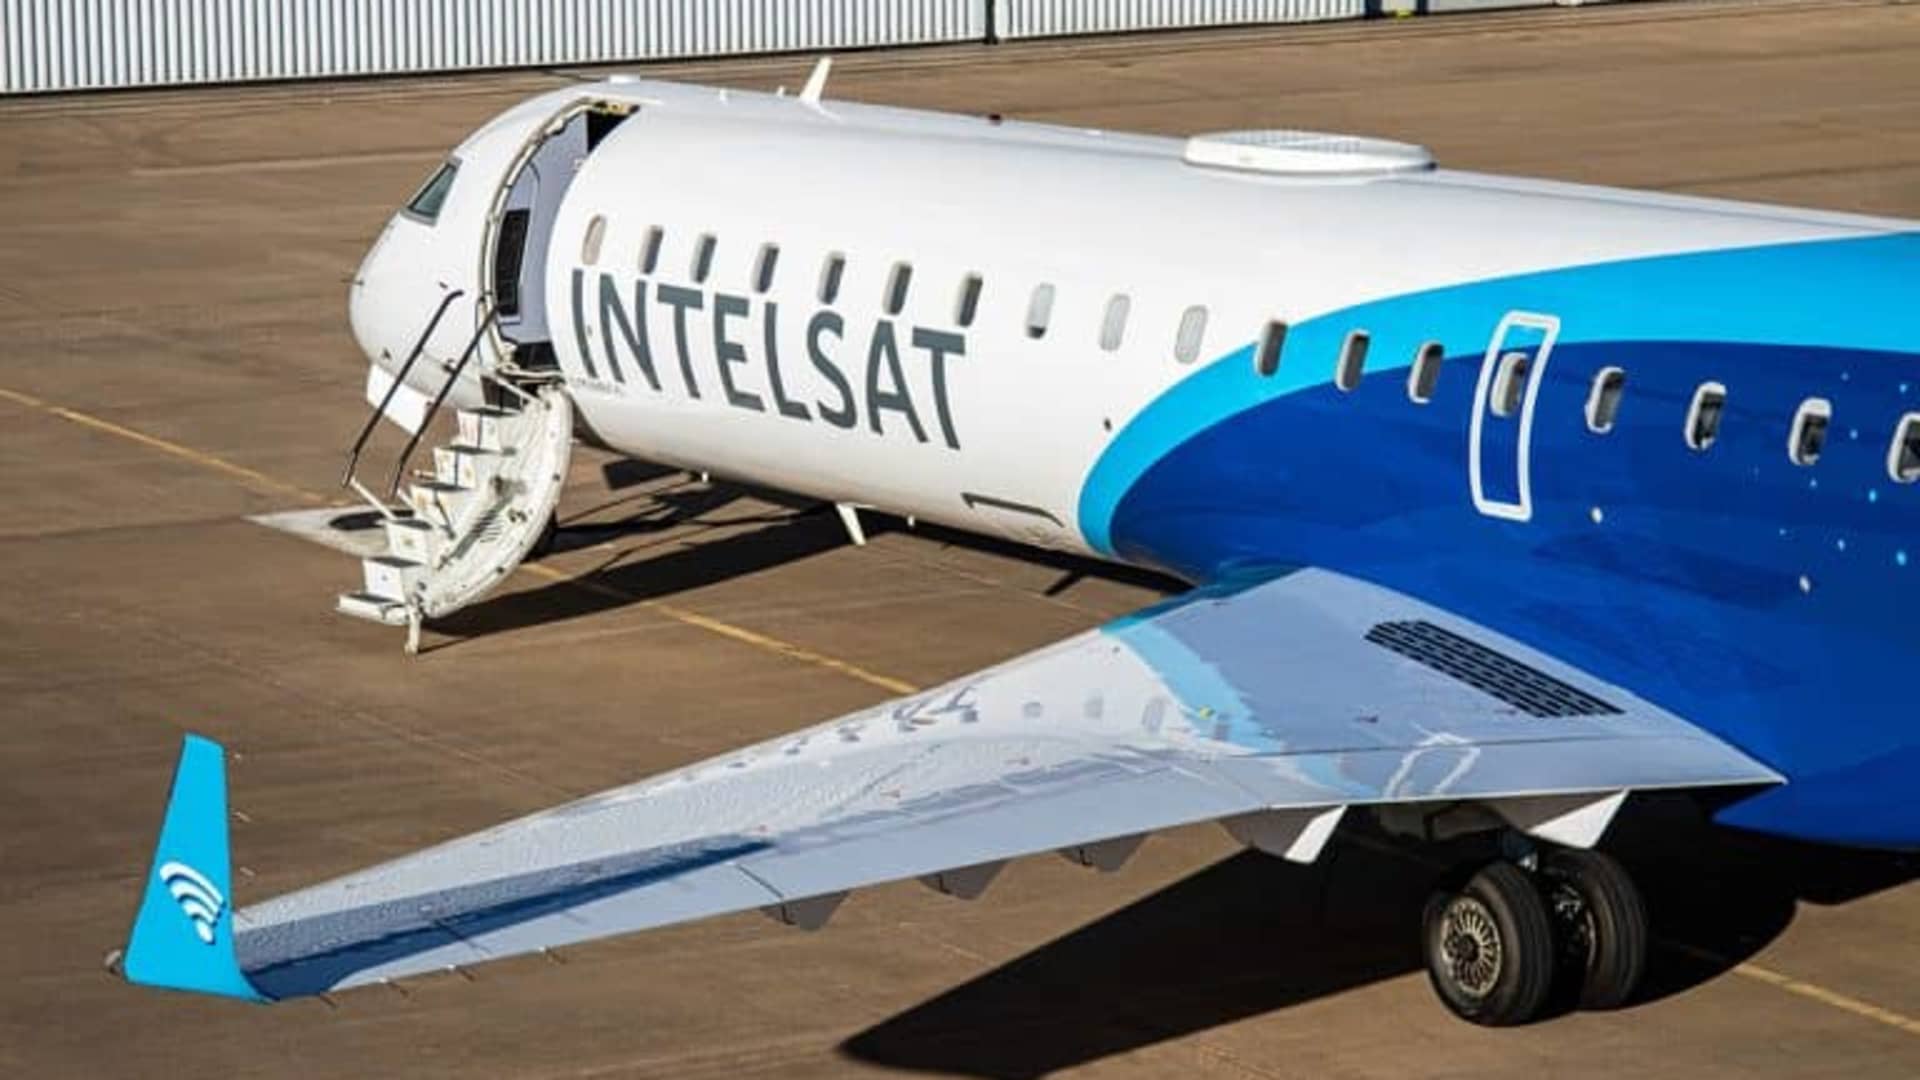 Intelsat ends merger talks with SES